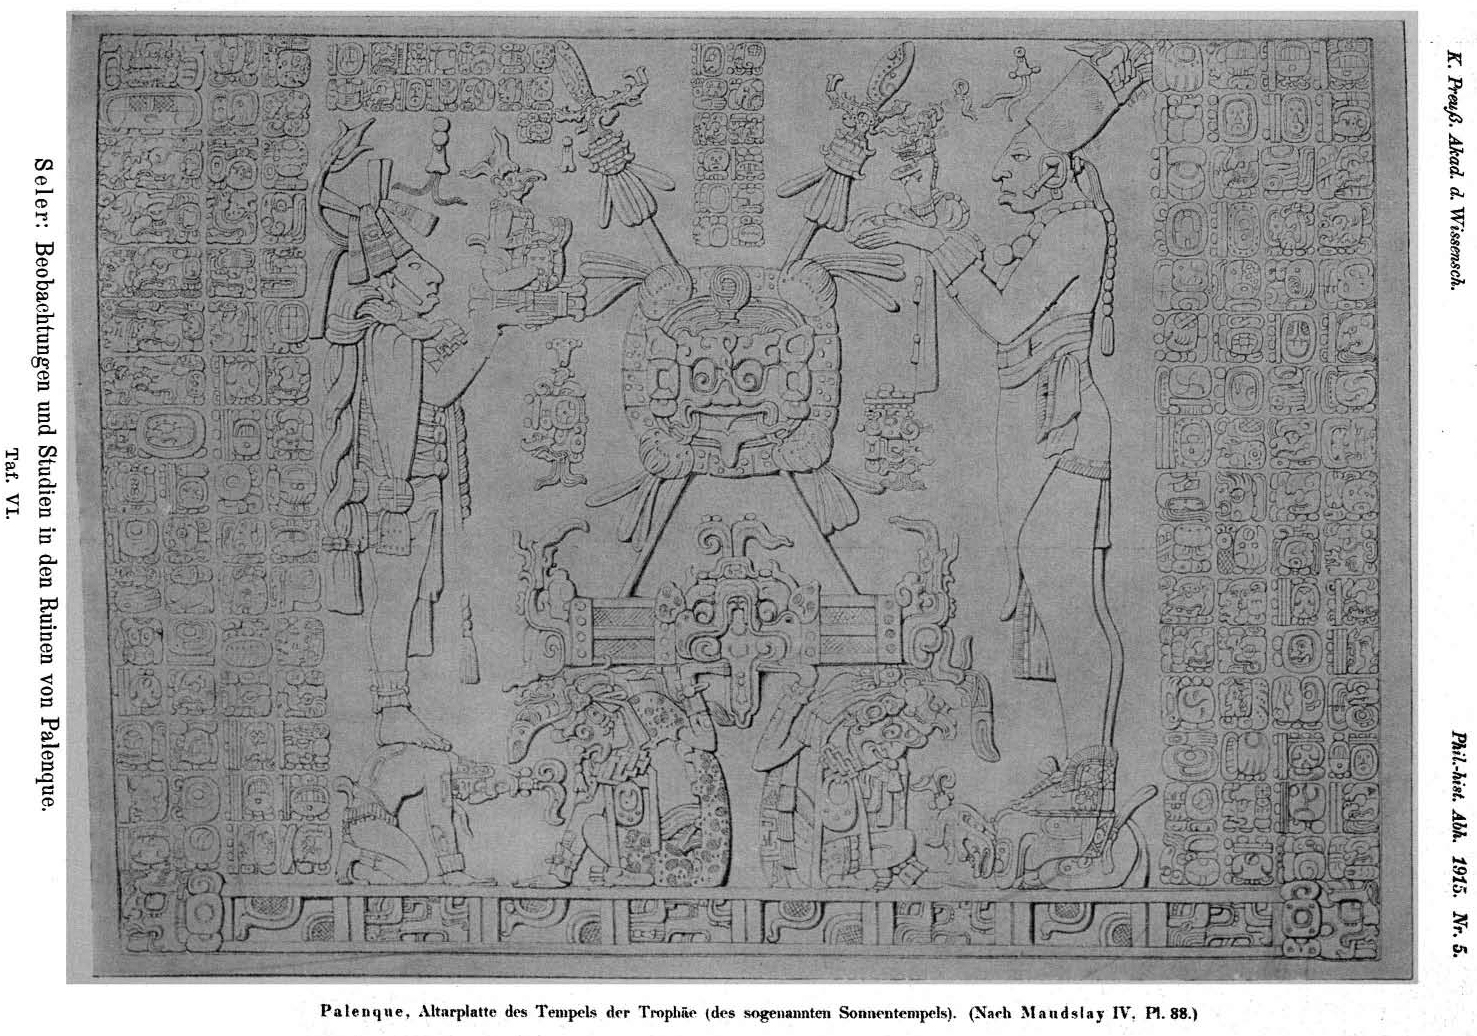 altarbild des sonnentempels von palenque